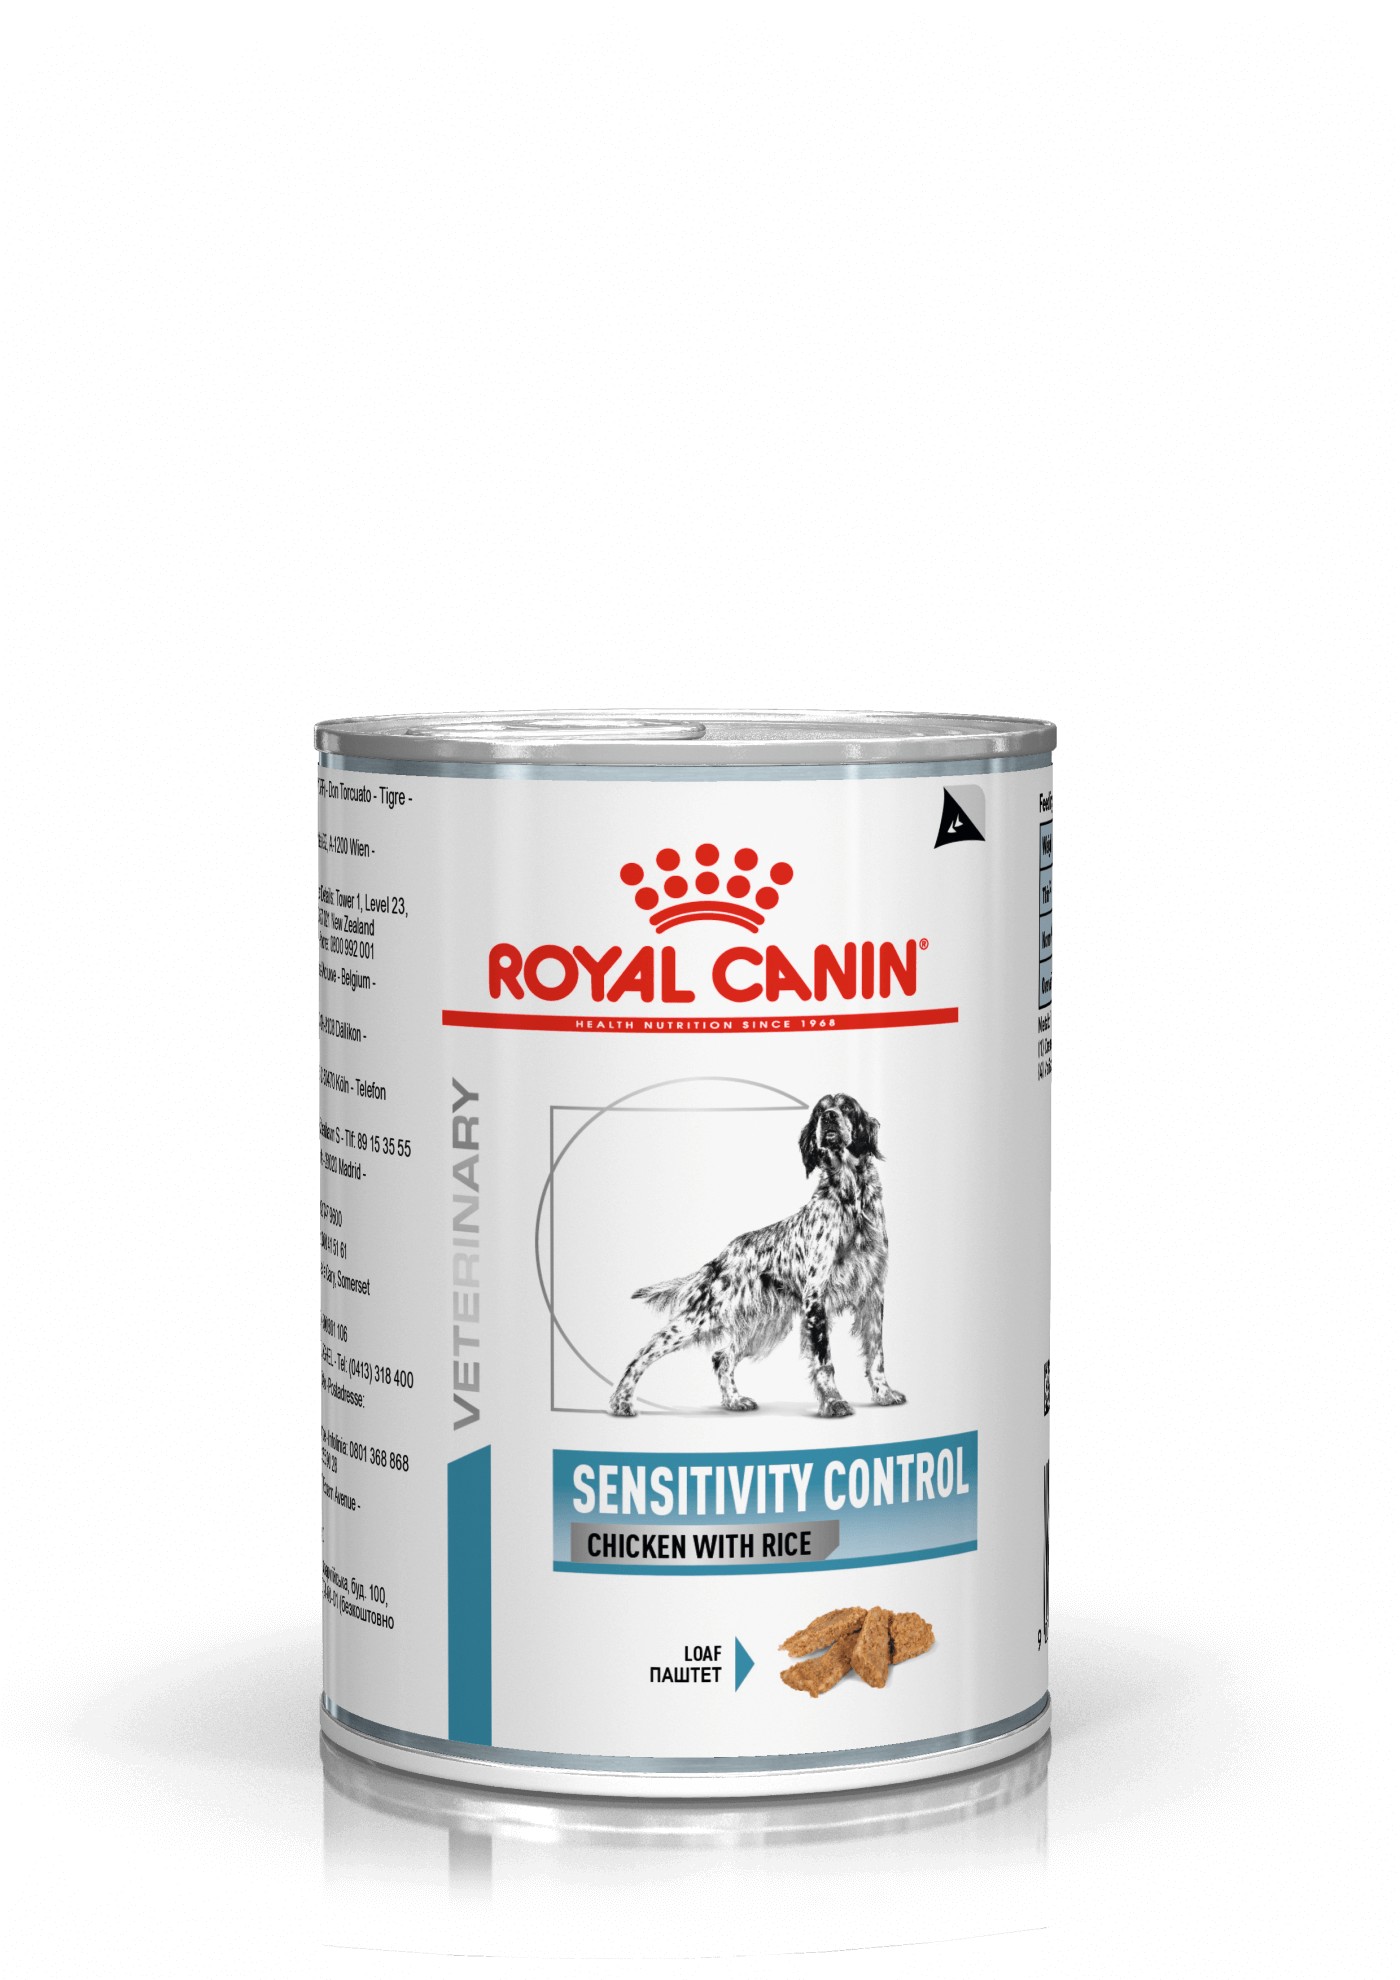 Royal Canin Veterinary Sensitivity Control kylling med ris hundefoder dåse